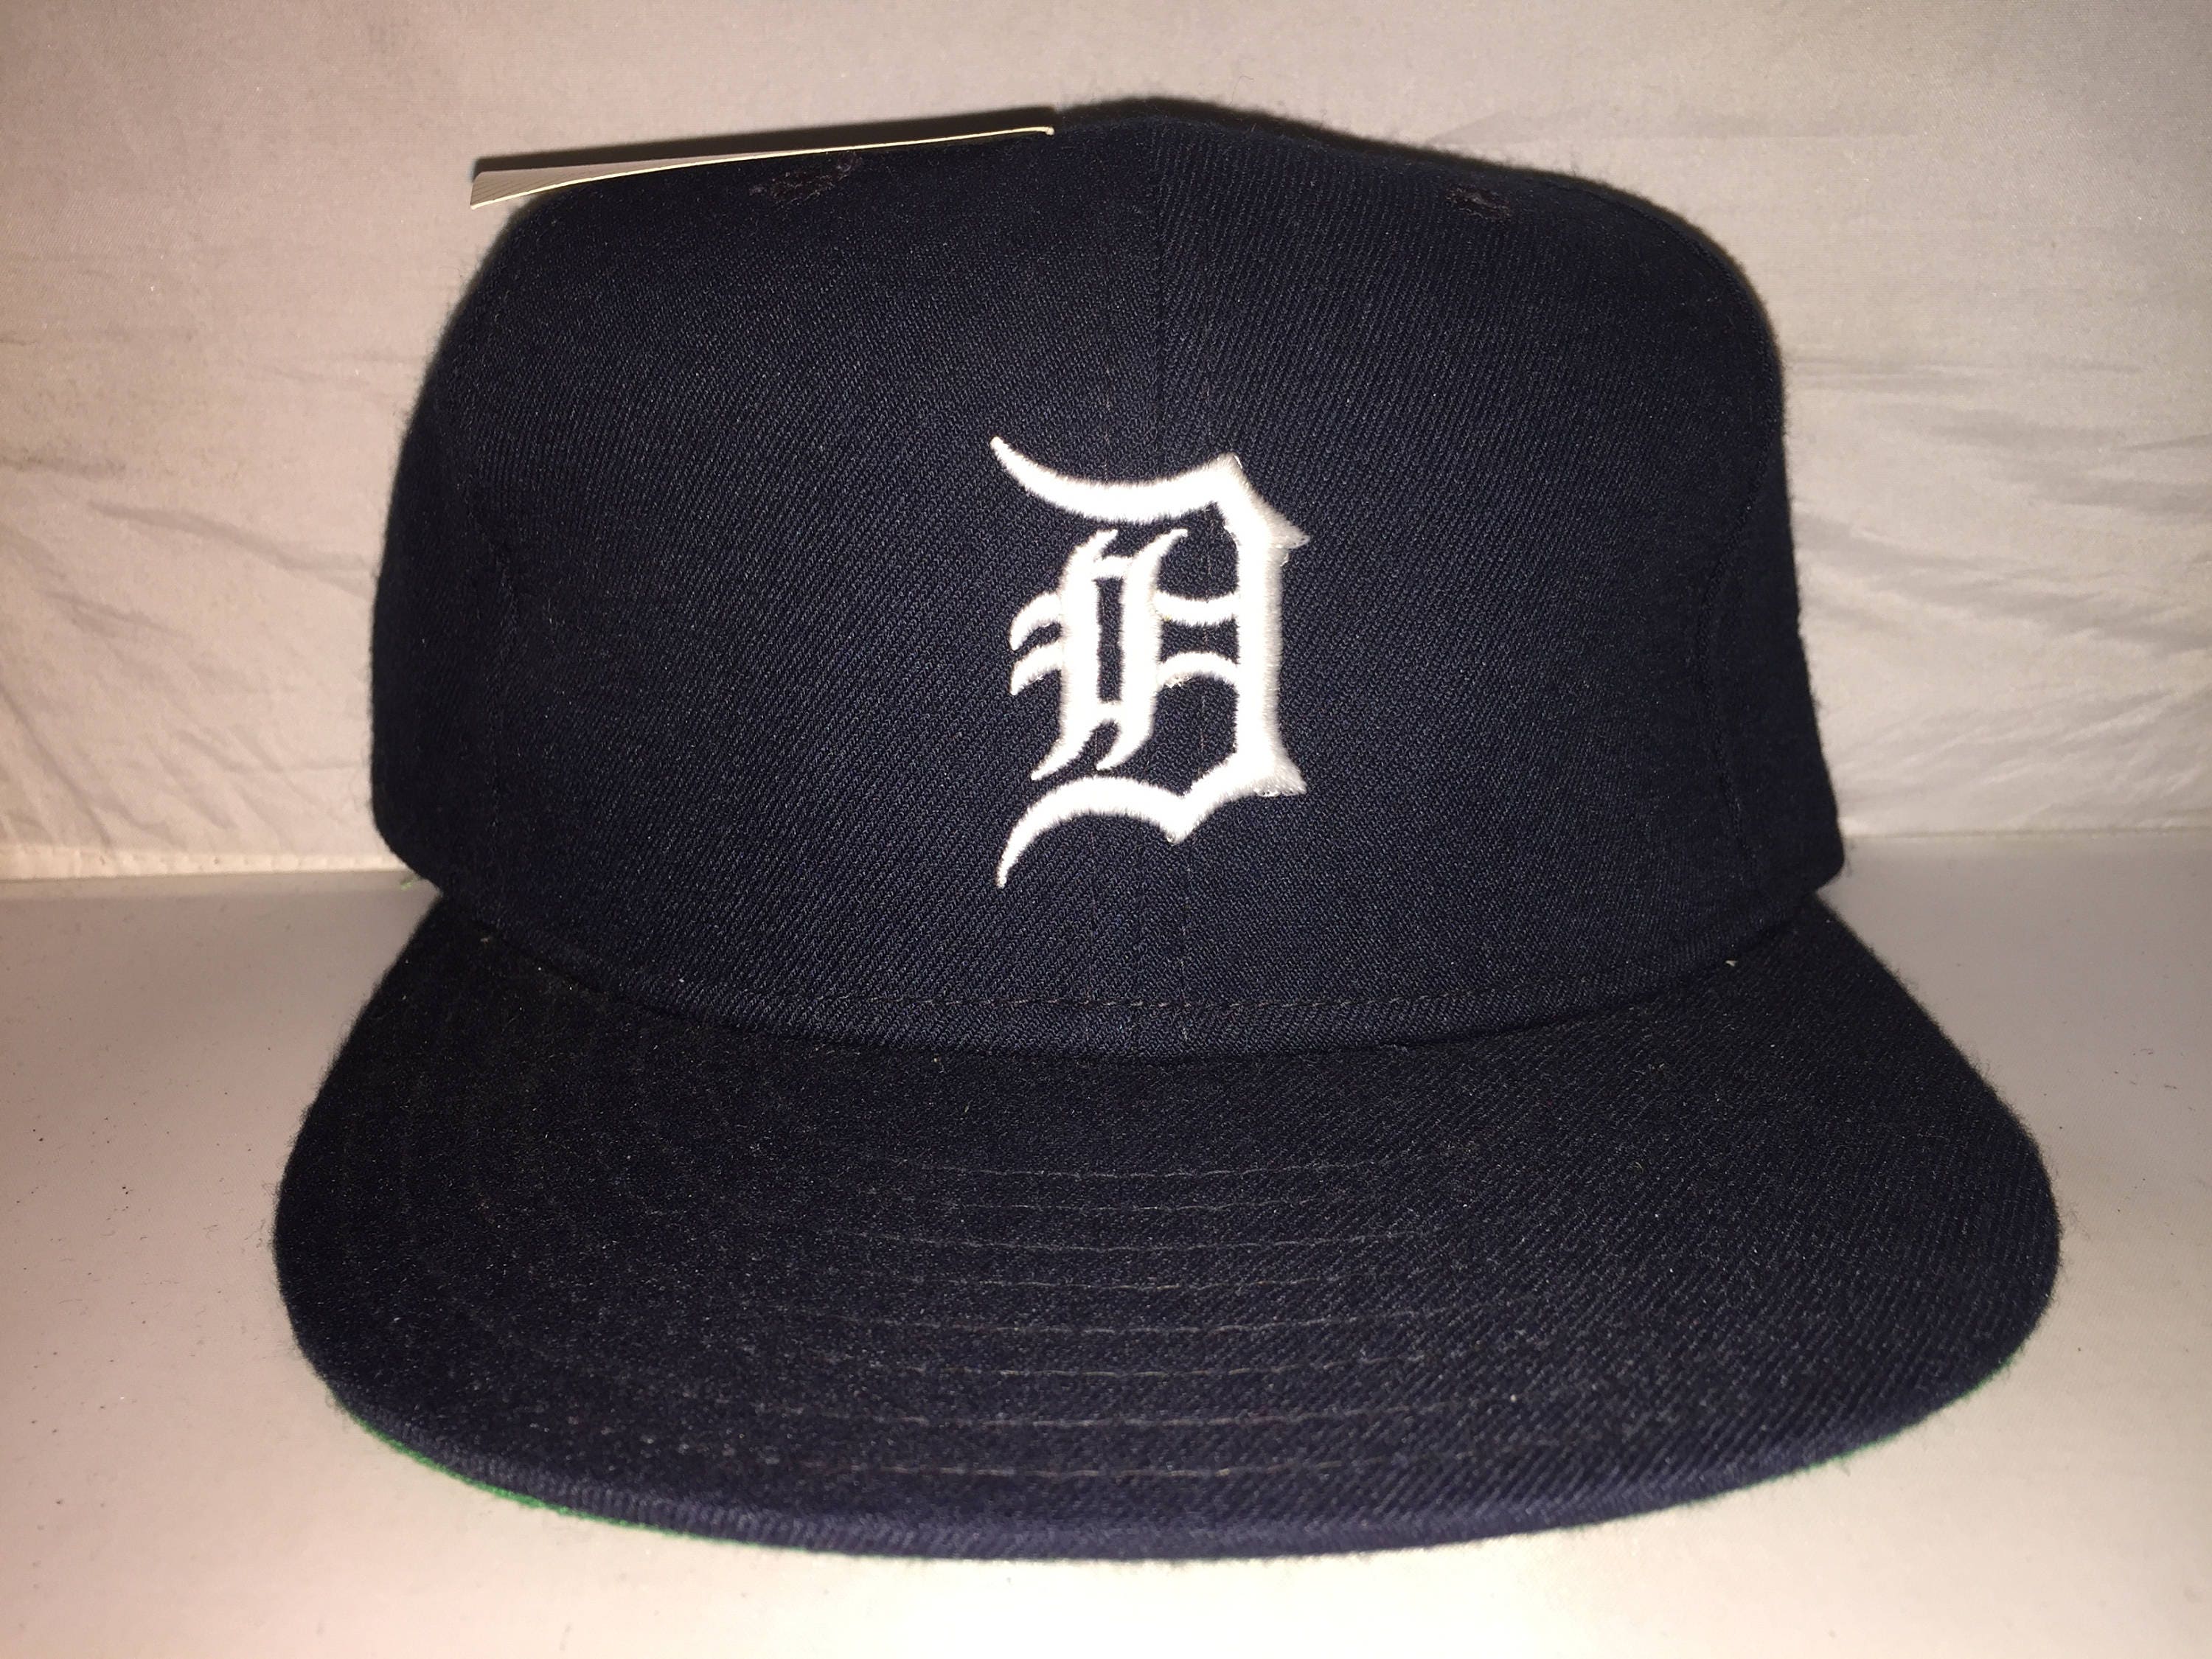 Vintage Detroit Tigers Athletics New Era Fitted hat cap size 7